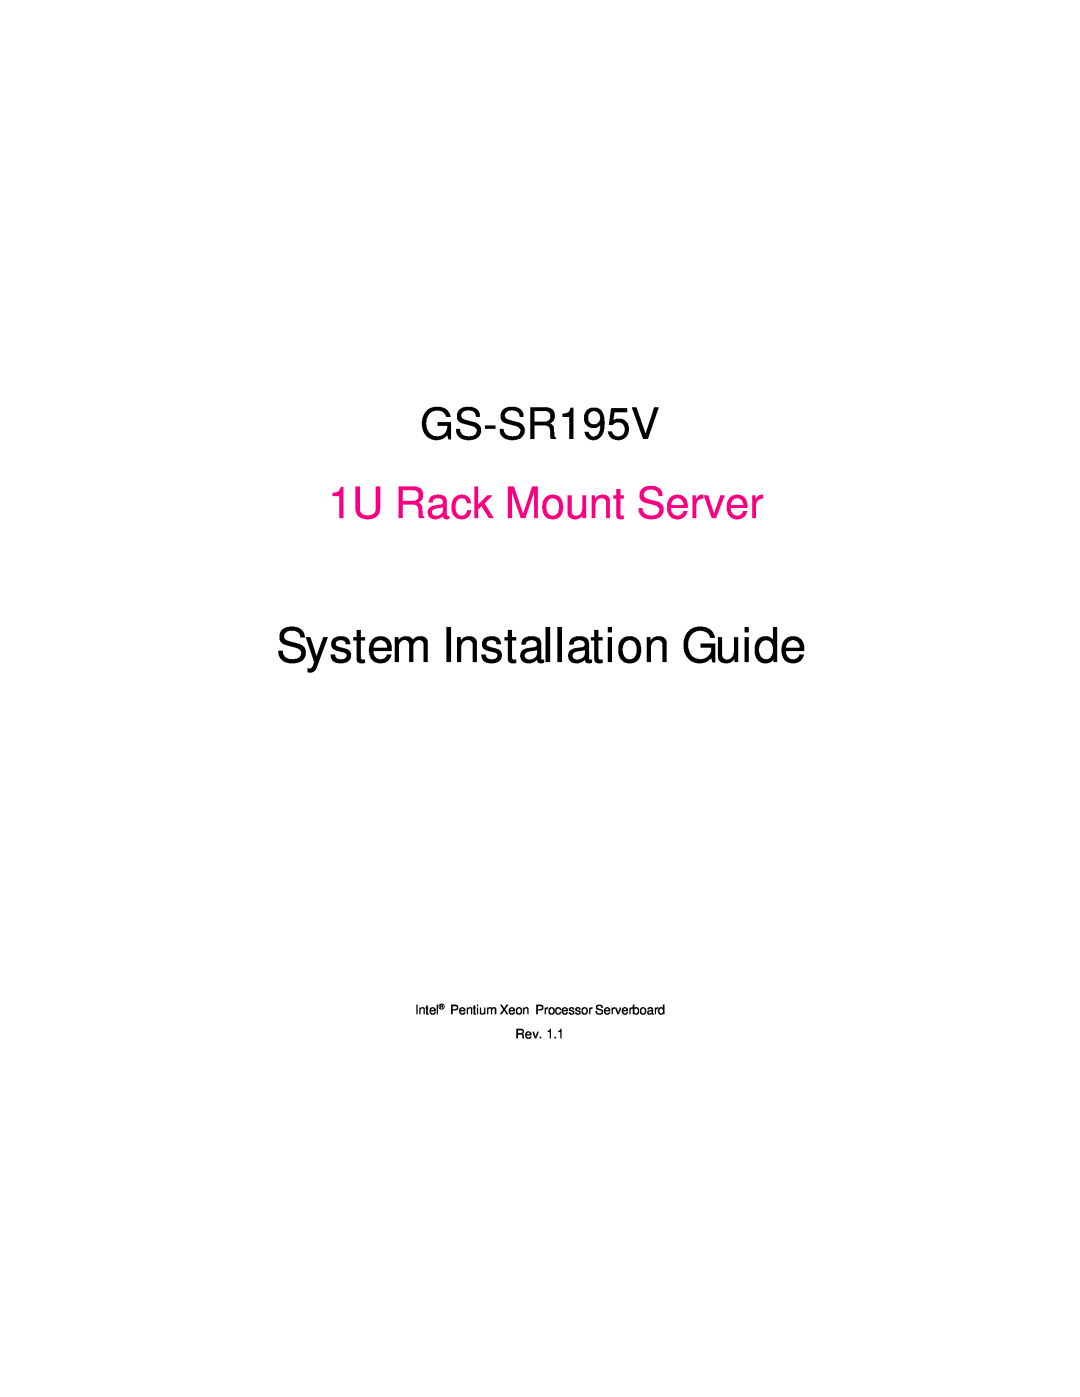 Intel GS-SR195V manual 1U Rack Mount Server, System Installation Guide 